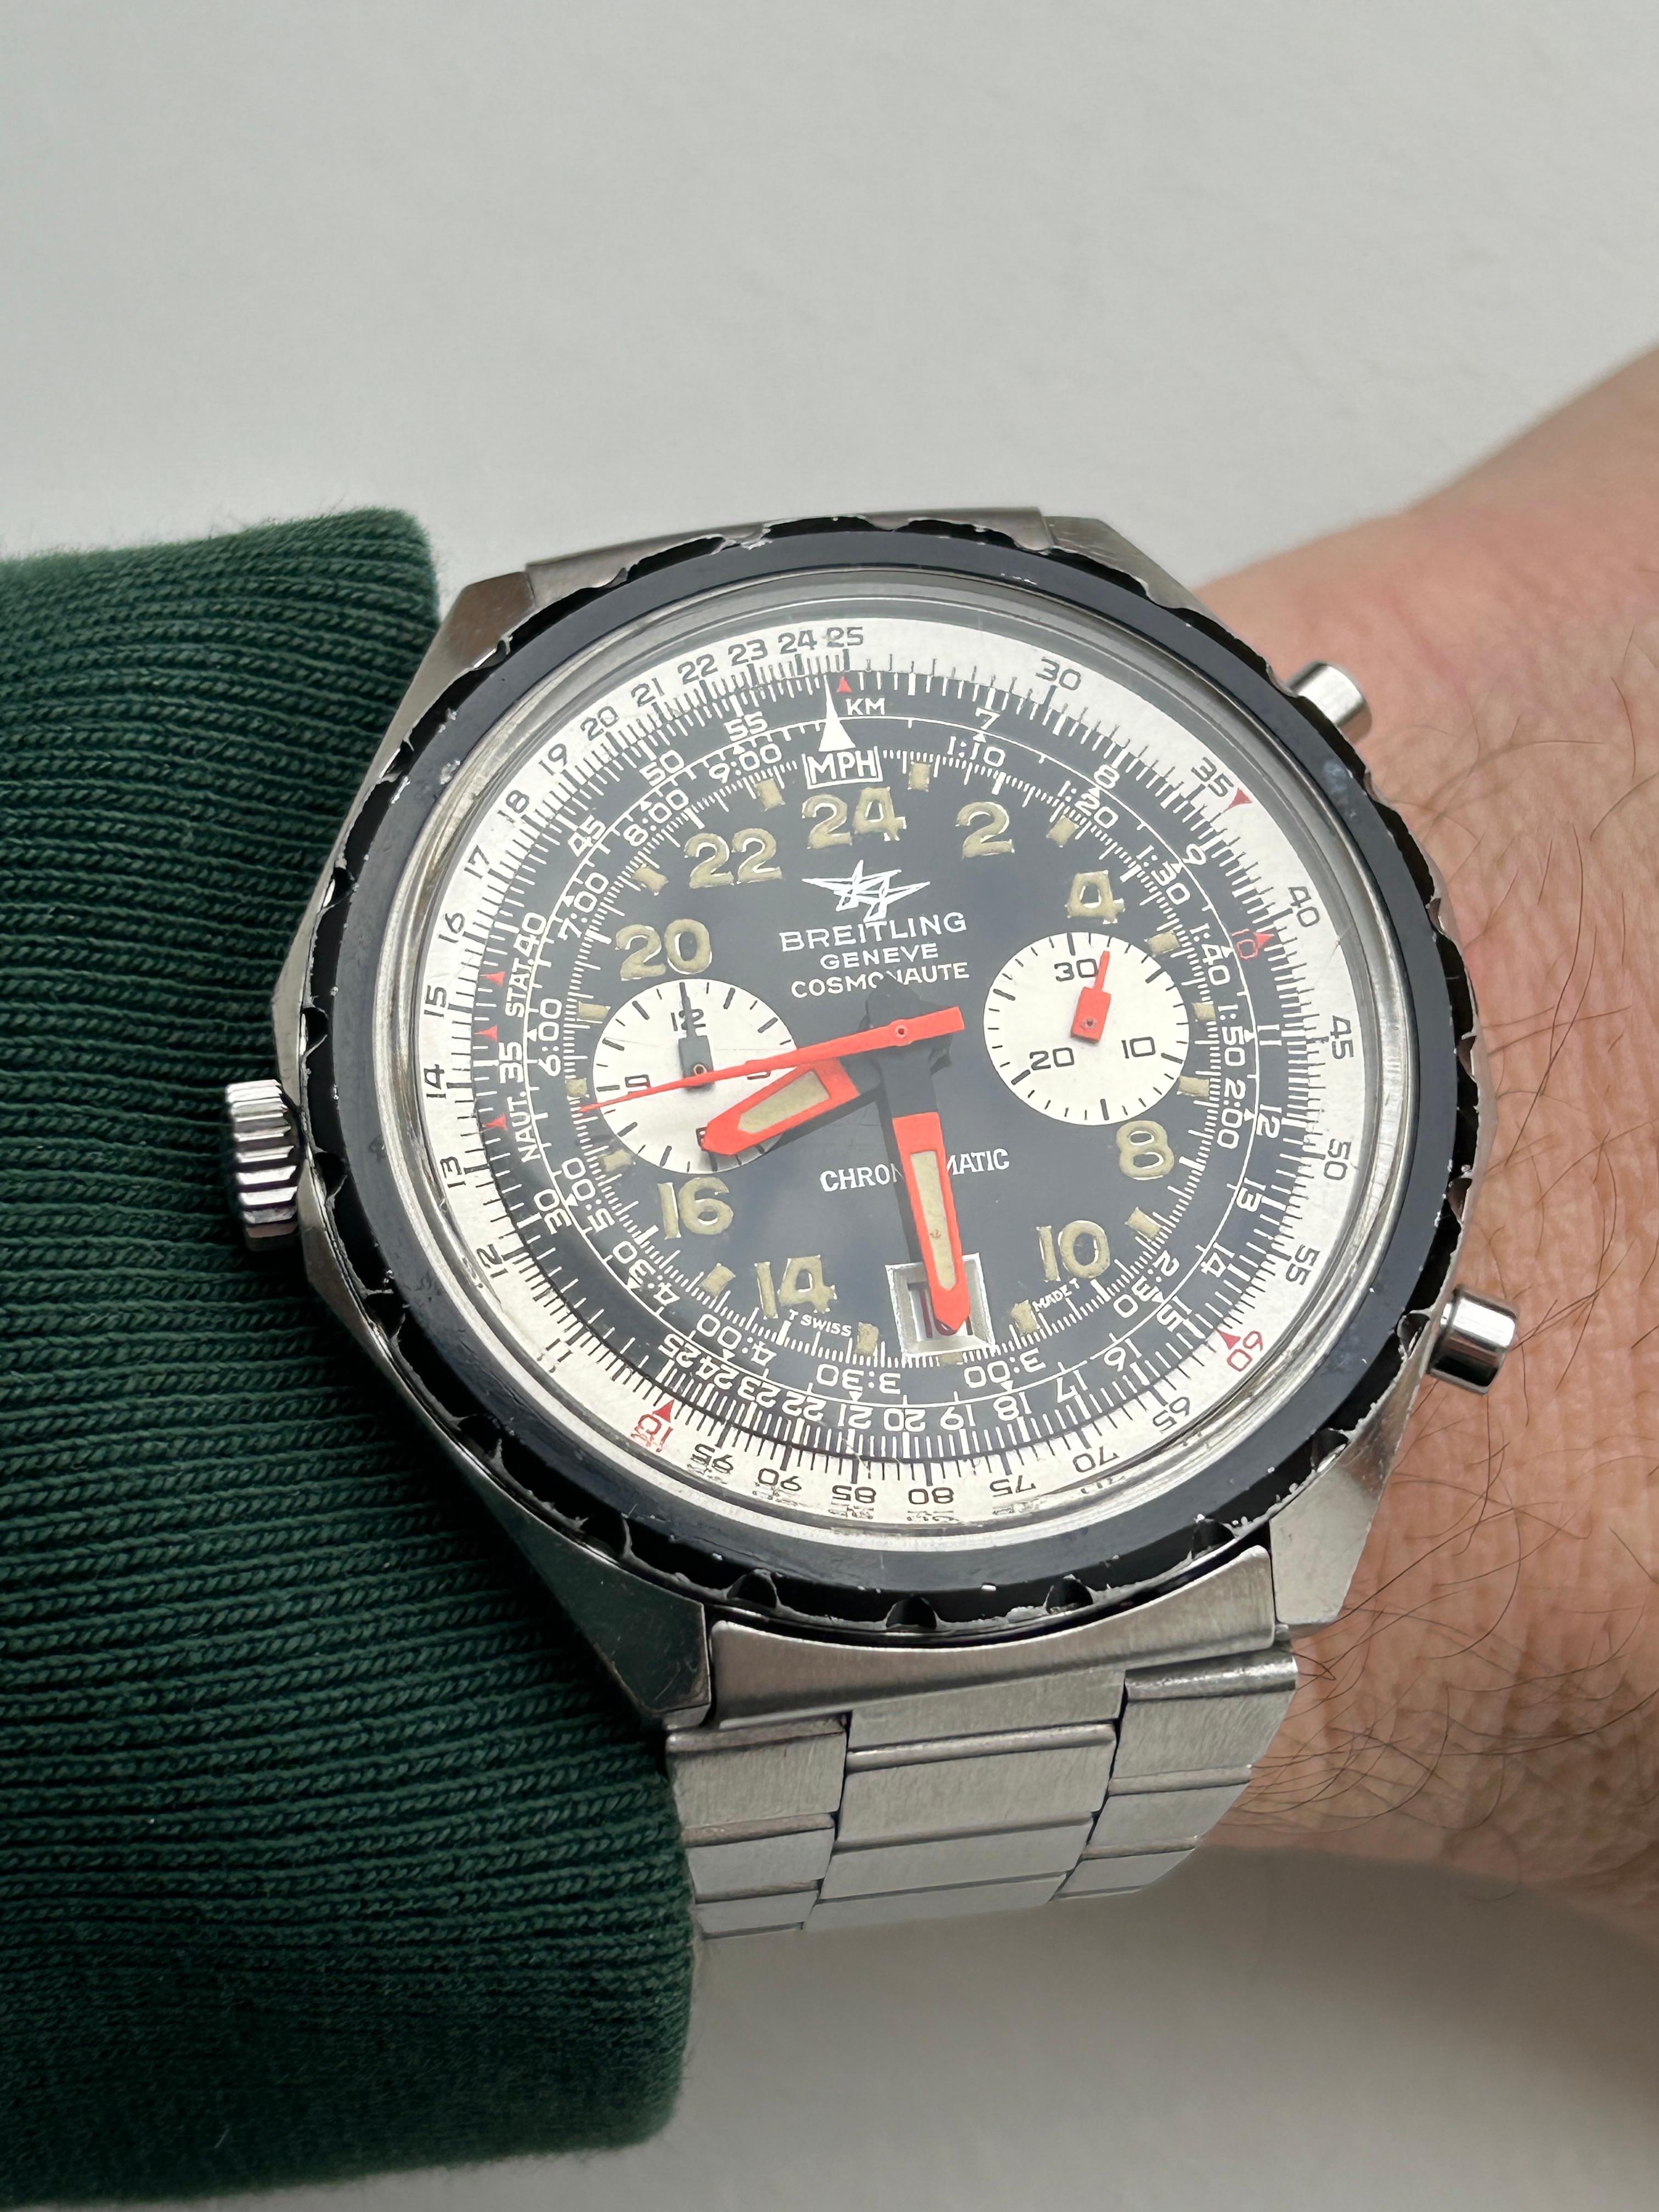 Breitling Cosmonaute Chrono-matic Armbanduhr 1809, Call 11, 48 mm Gehäuse. ca. 1970. im Angebot 2